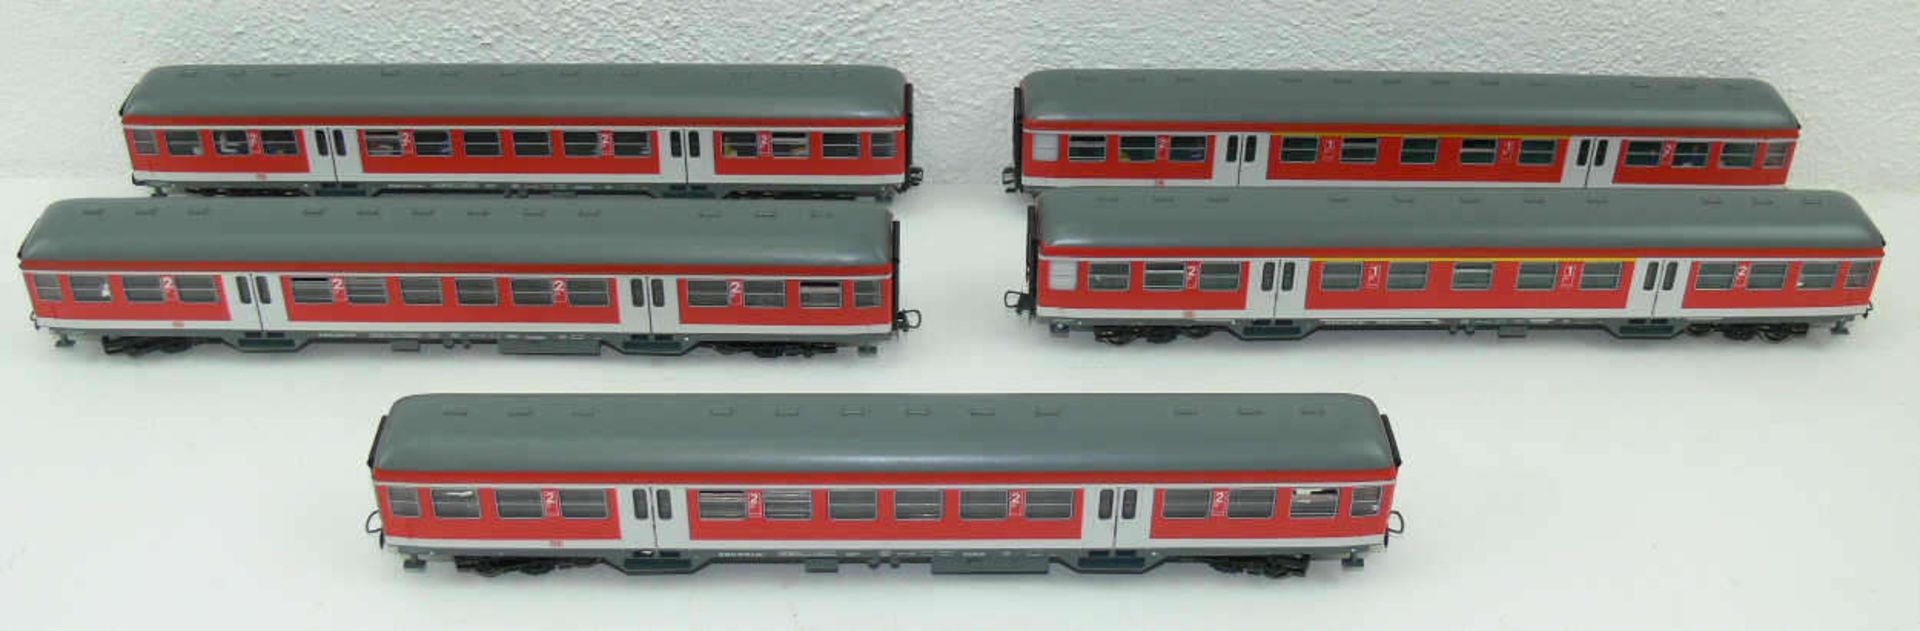 Roco, Konvolut Nahverkehrszug - Wagen. 2 x 1./2. Klasse (Abrnz) und 3 x 2. Klase (Brnz). Sehr